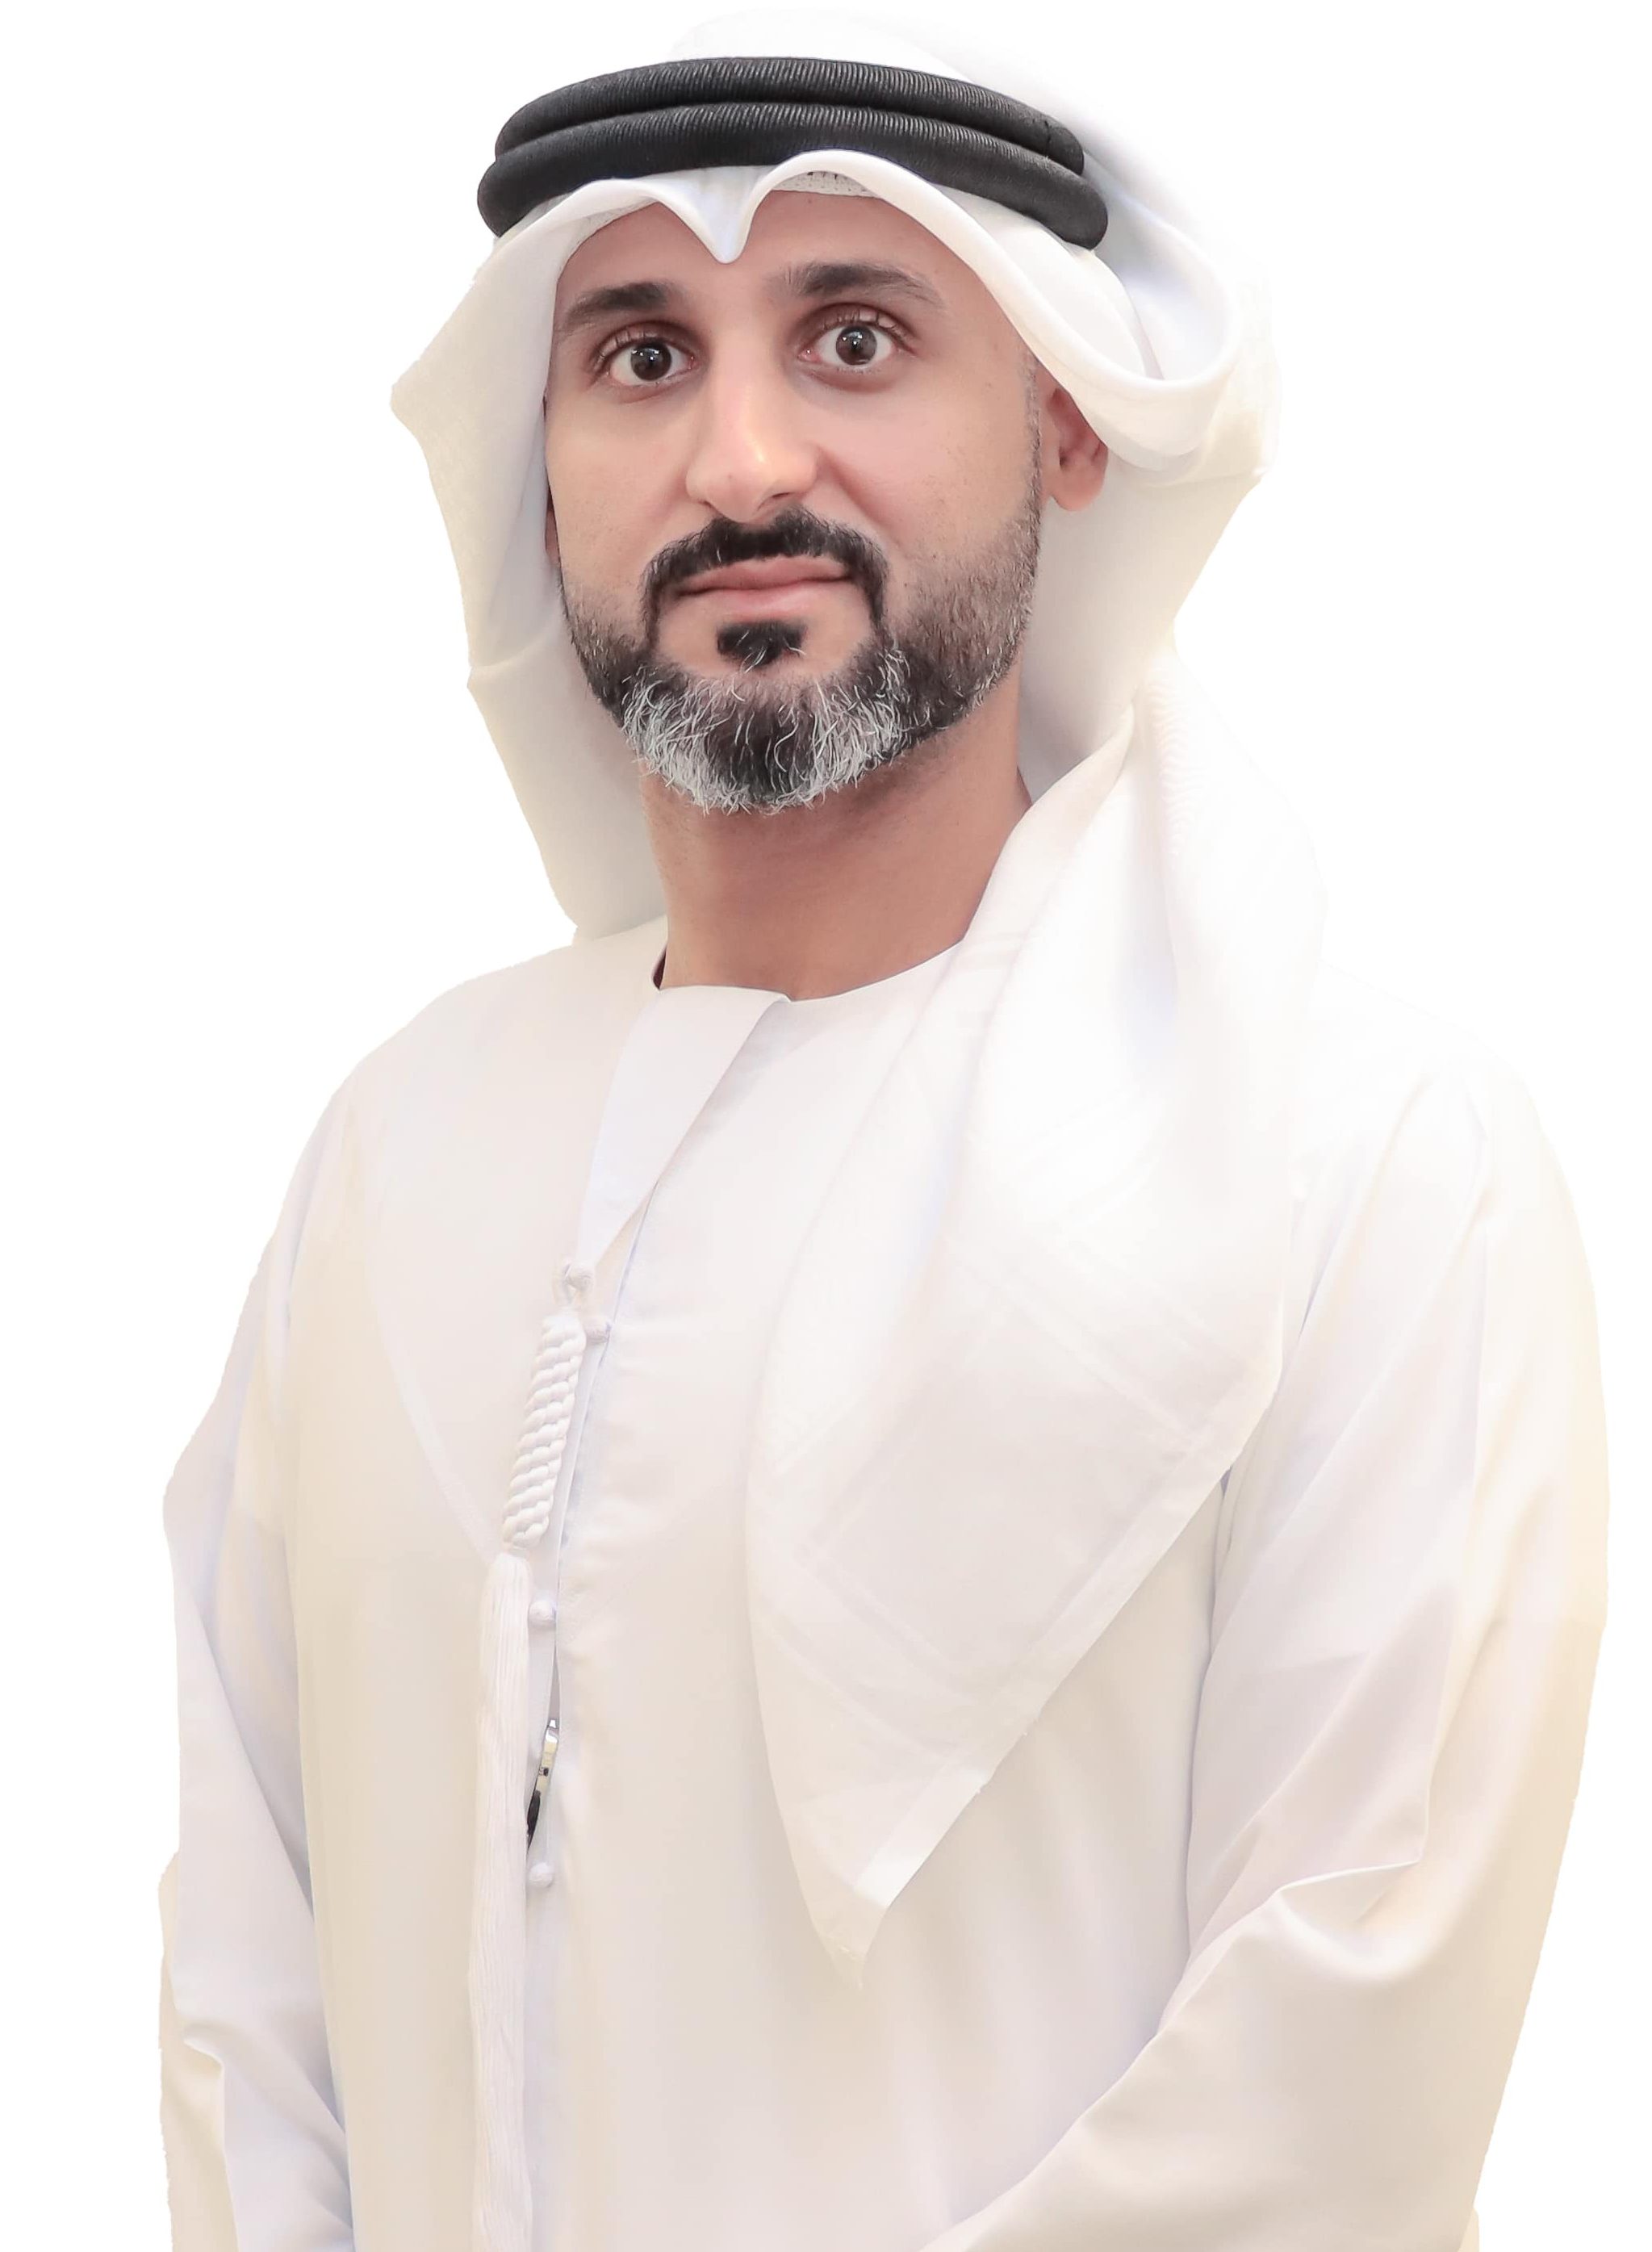 Dr. Omar Al Afeefi